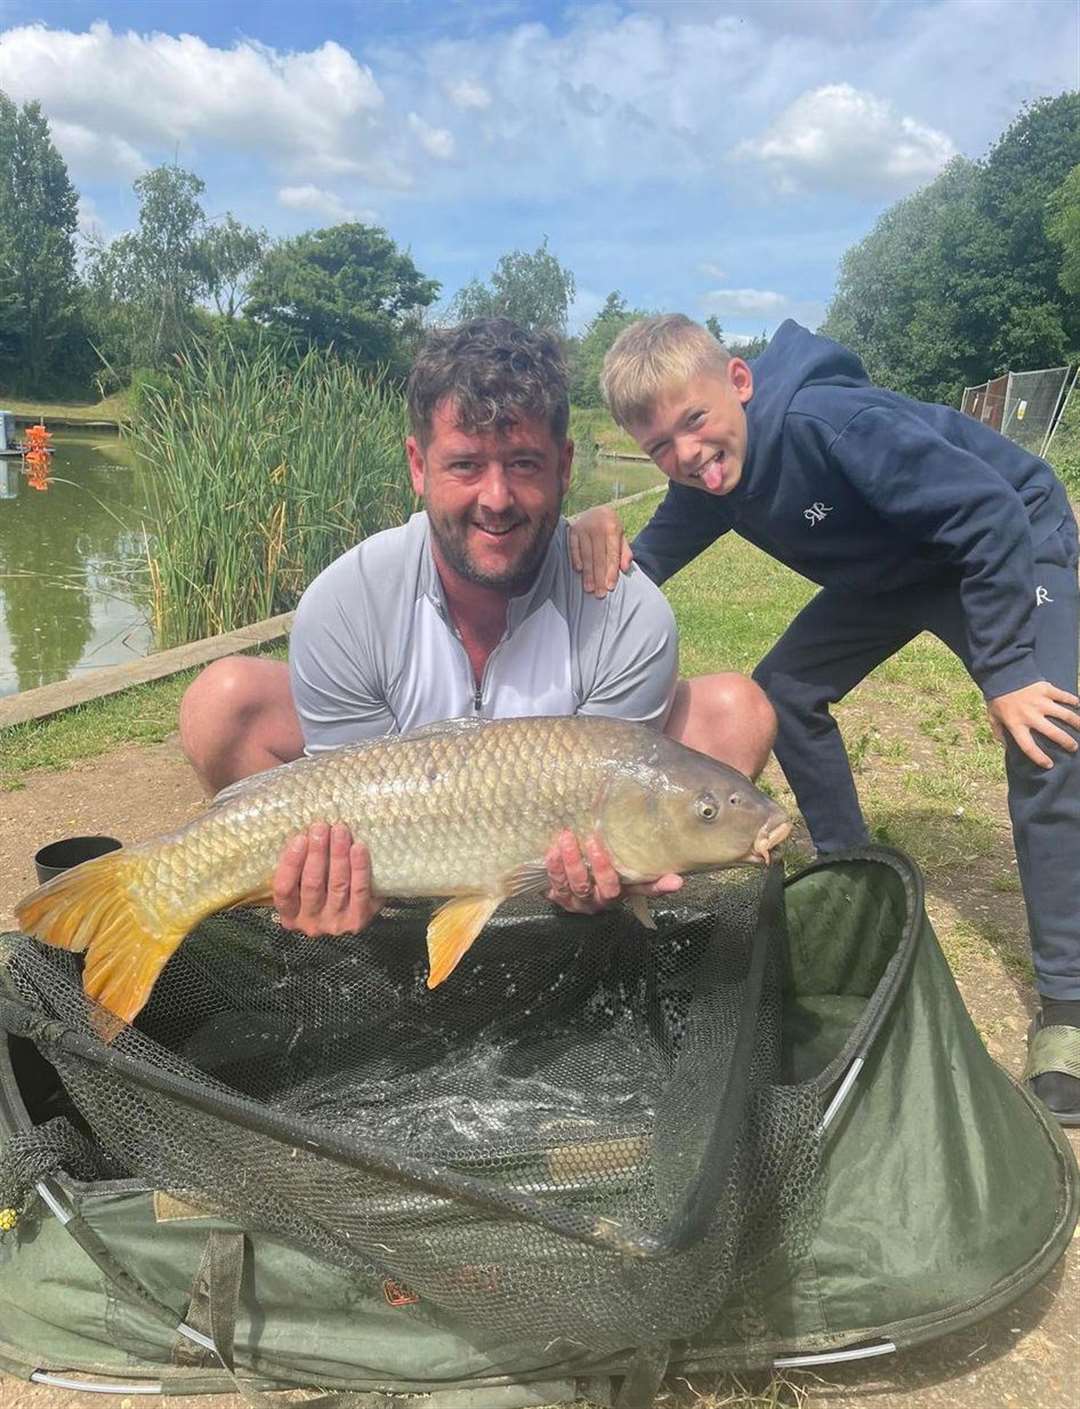 Craig regularly took his son Teddy fishing